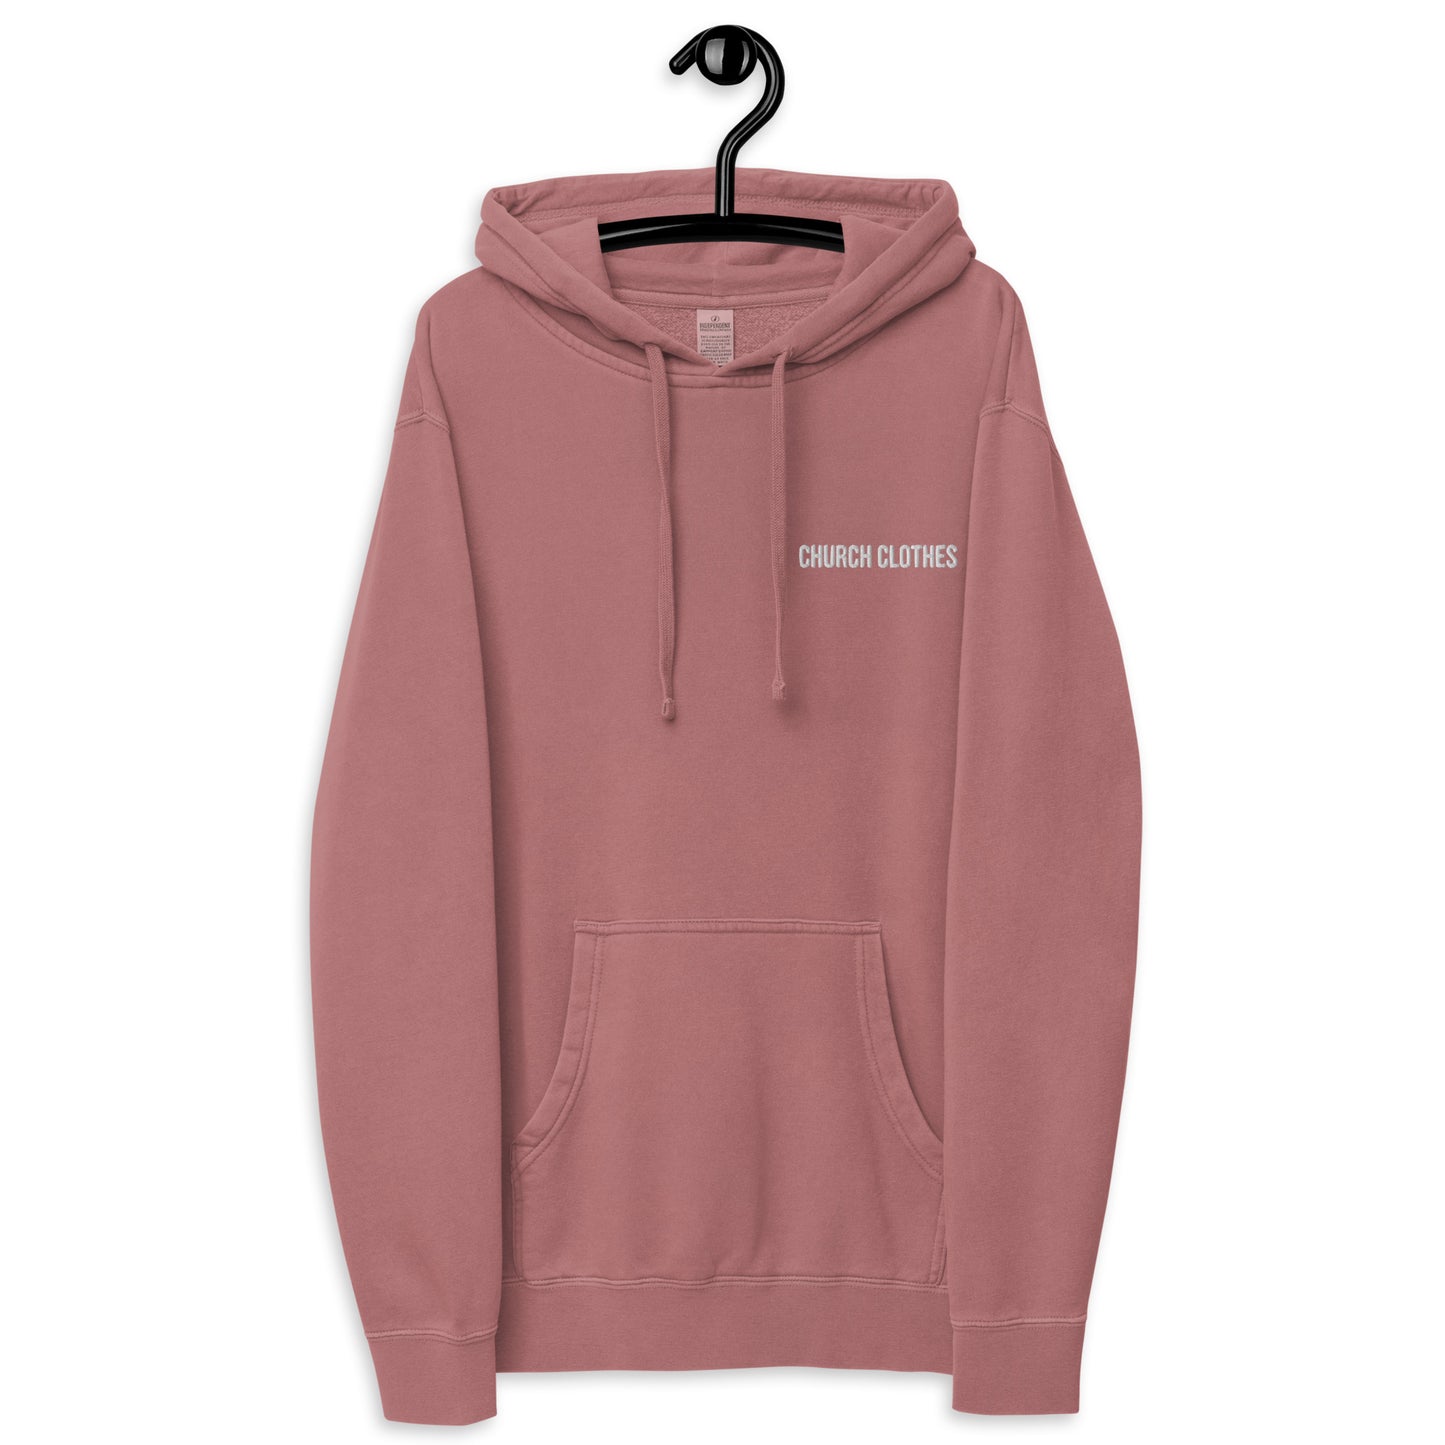 Church Clothes hoodie (Unisex)